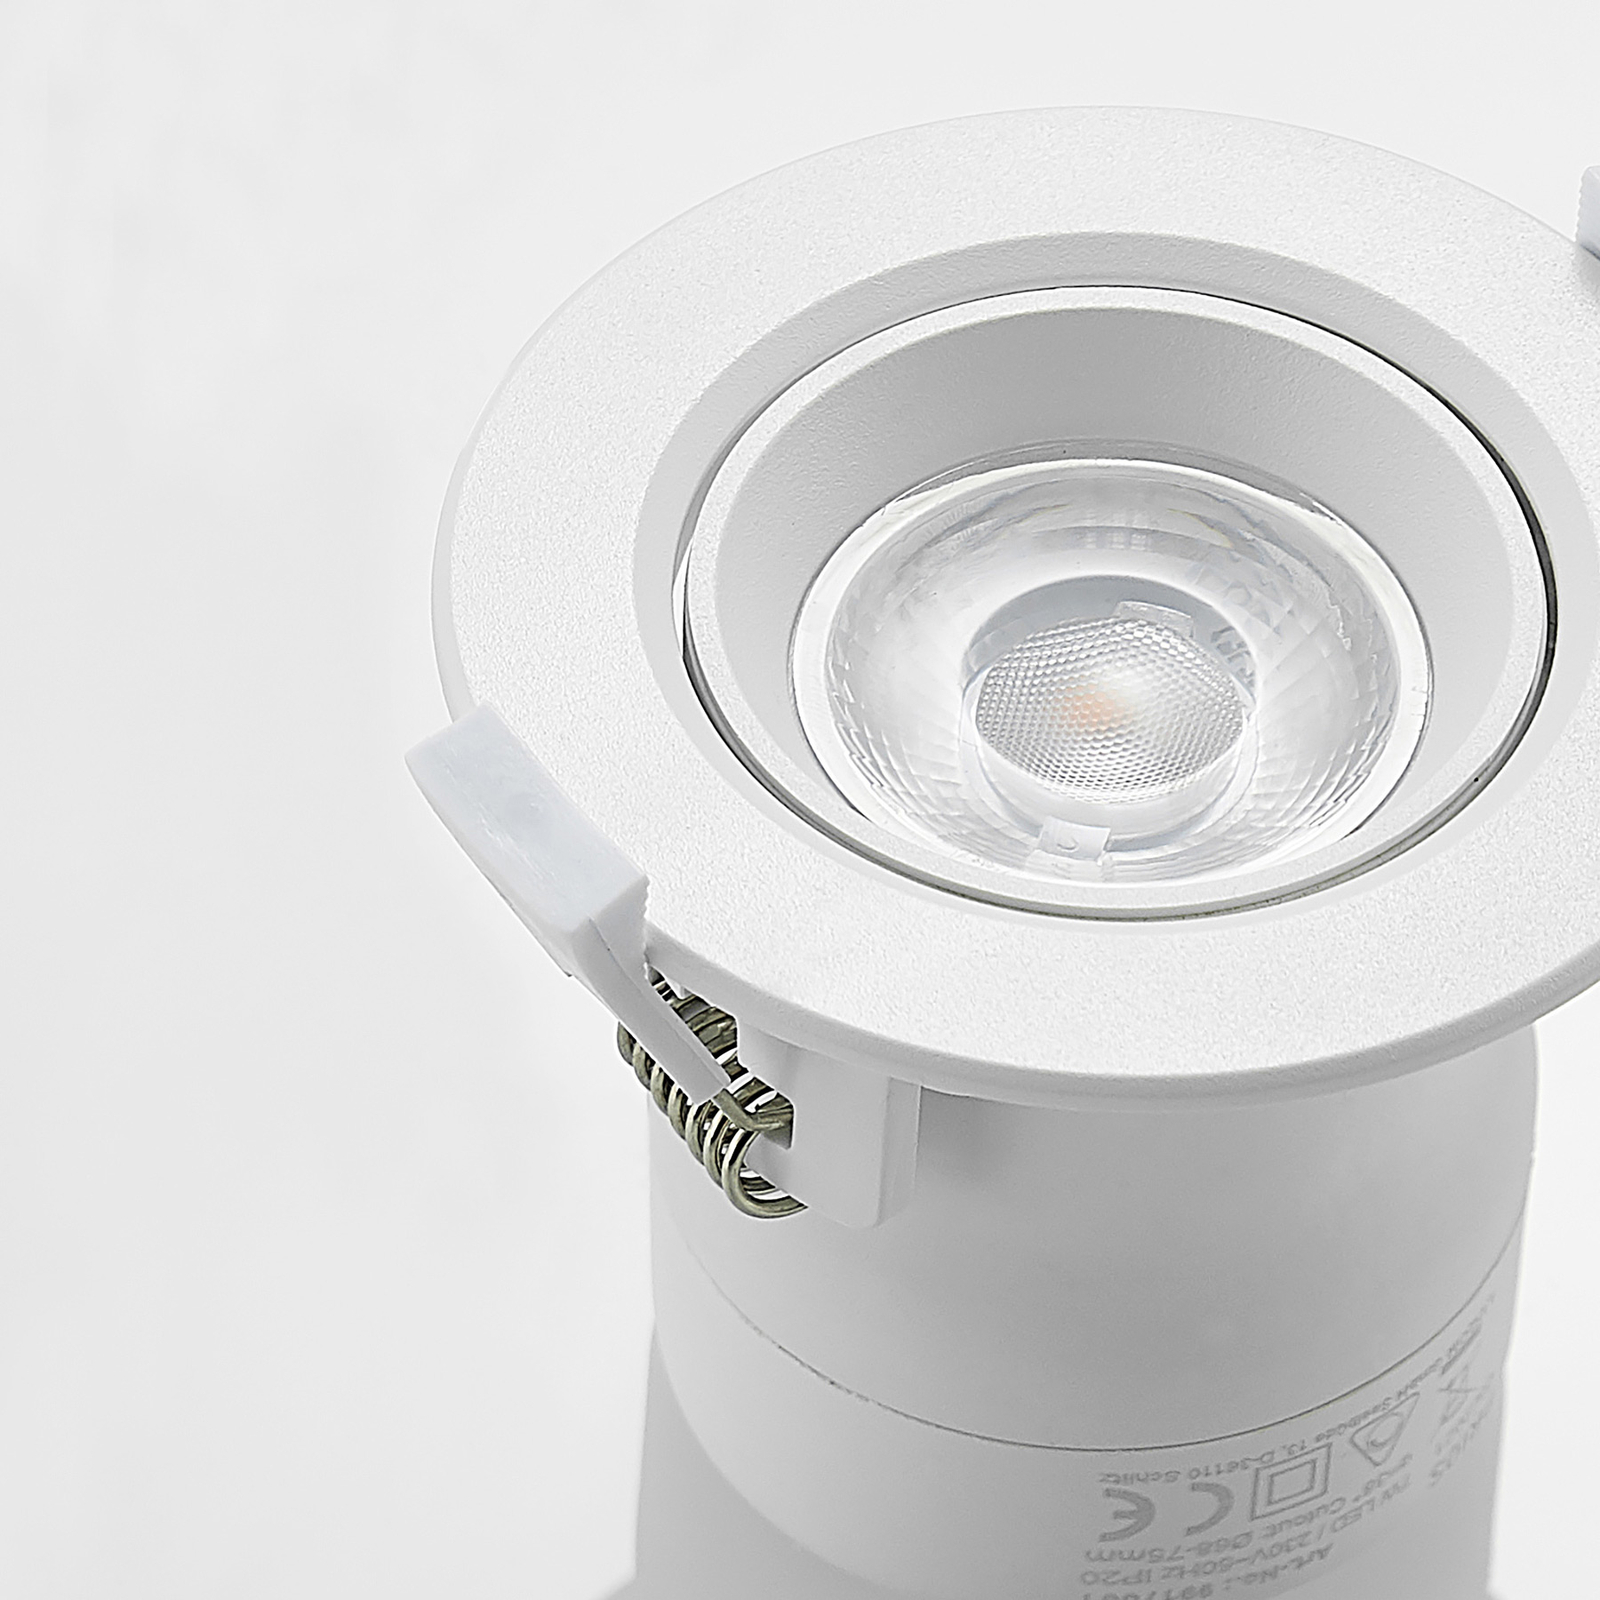 Prios Shima LED uppoasennusvalaisin, valkoinen, 3000 K, 7 W